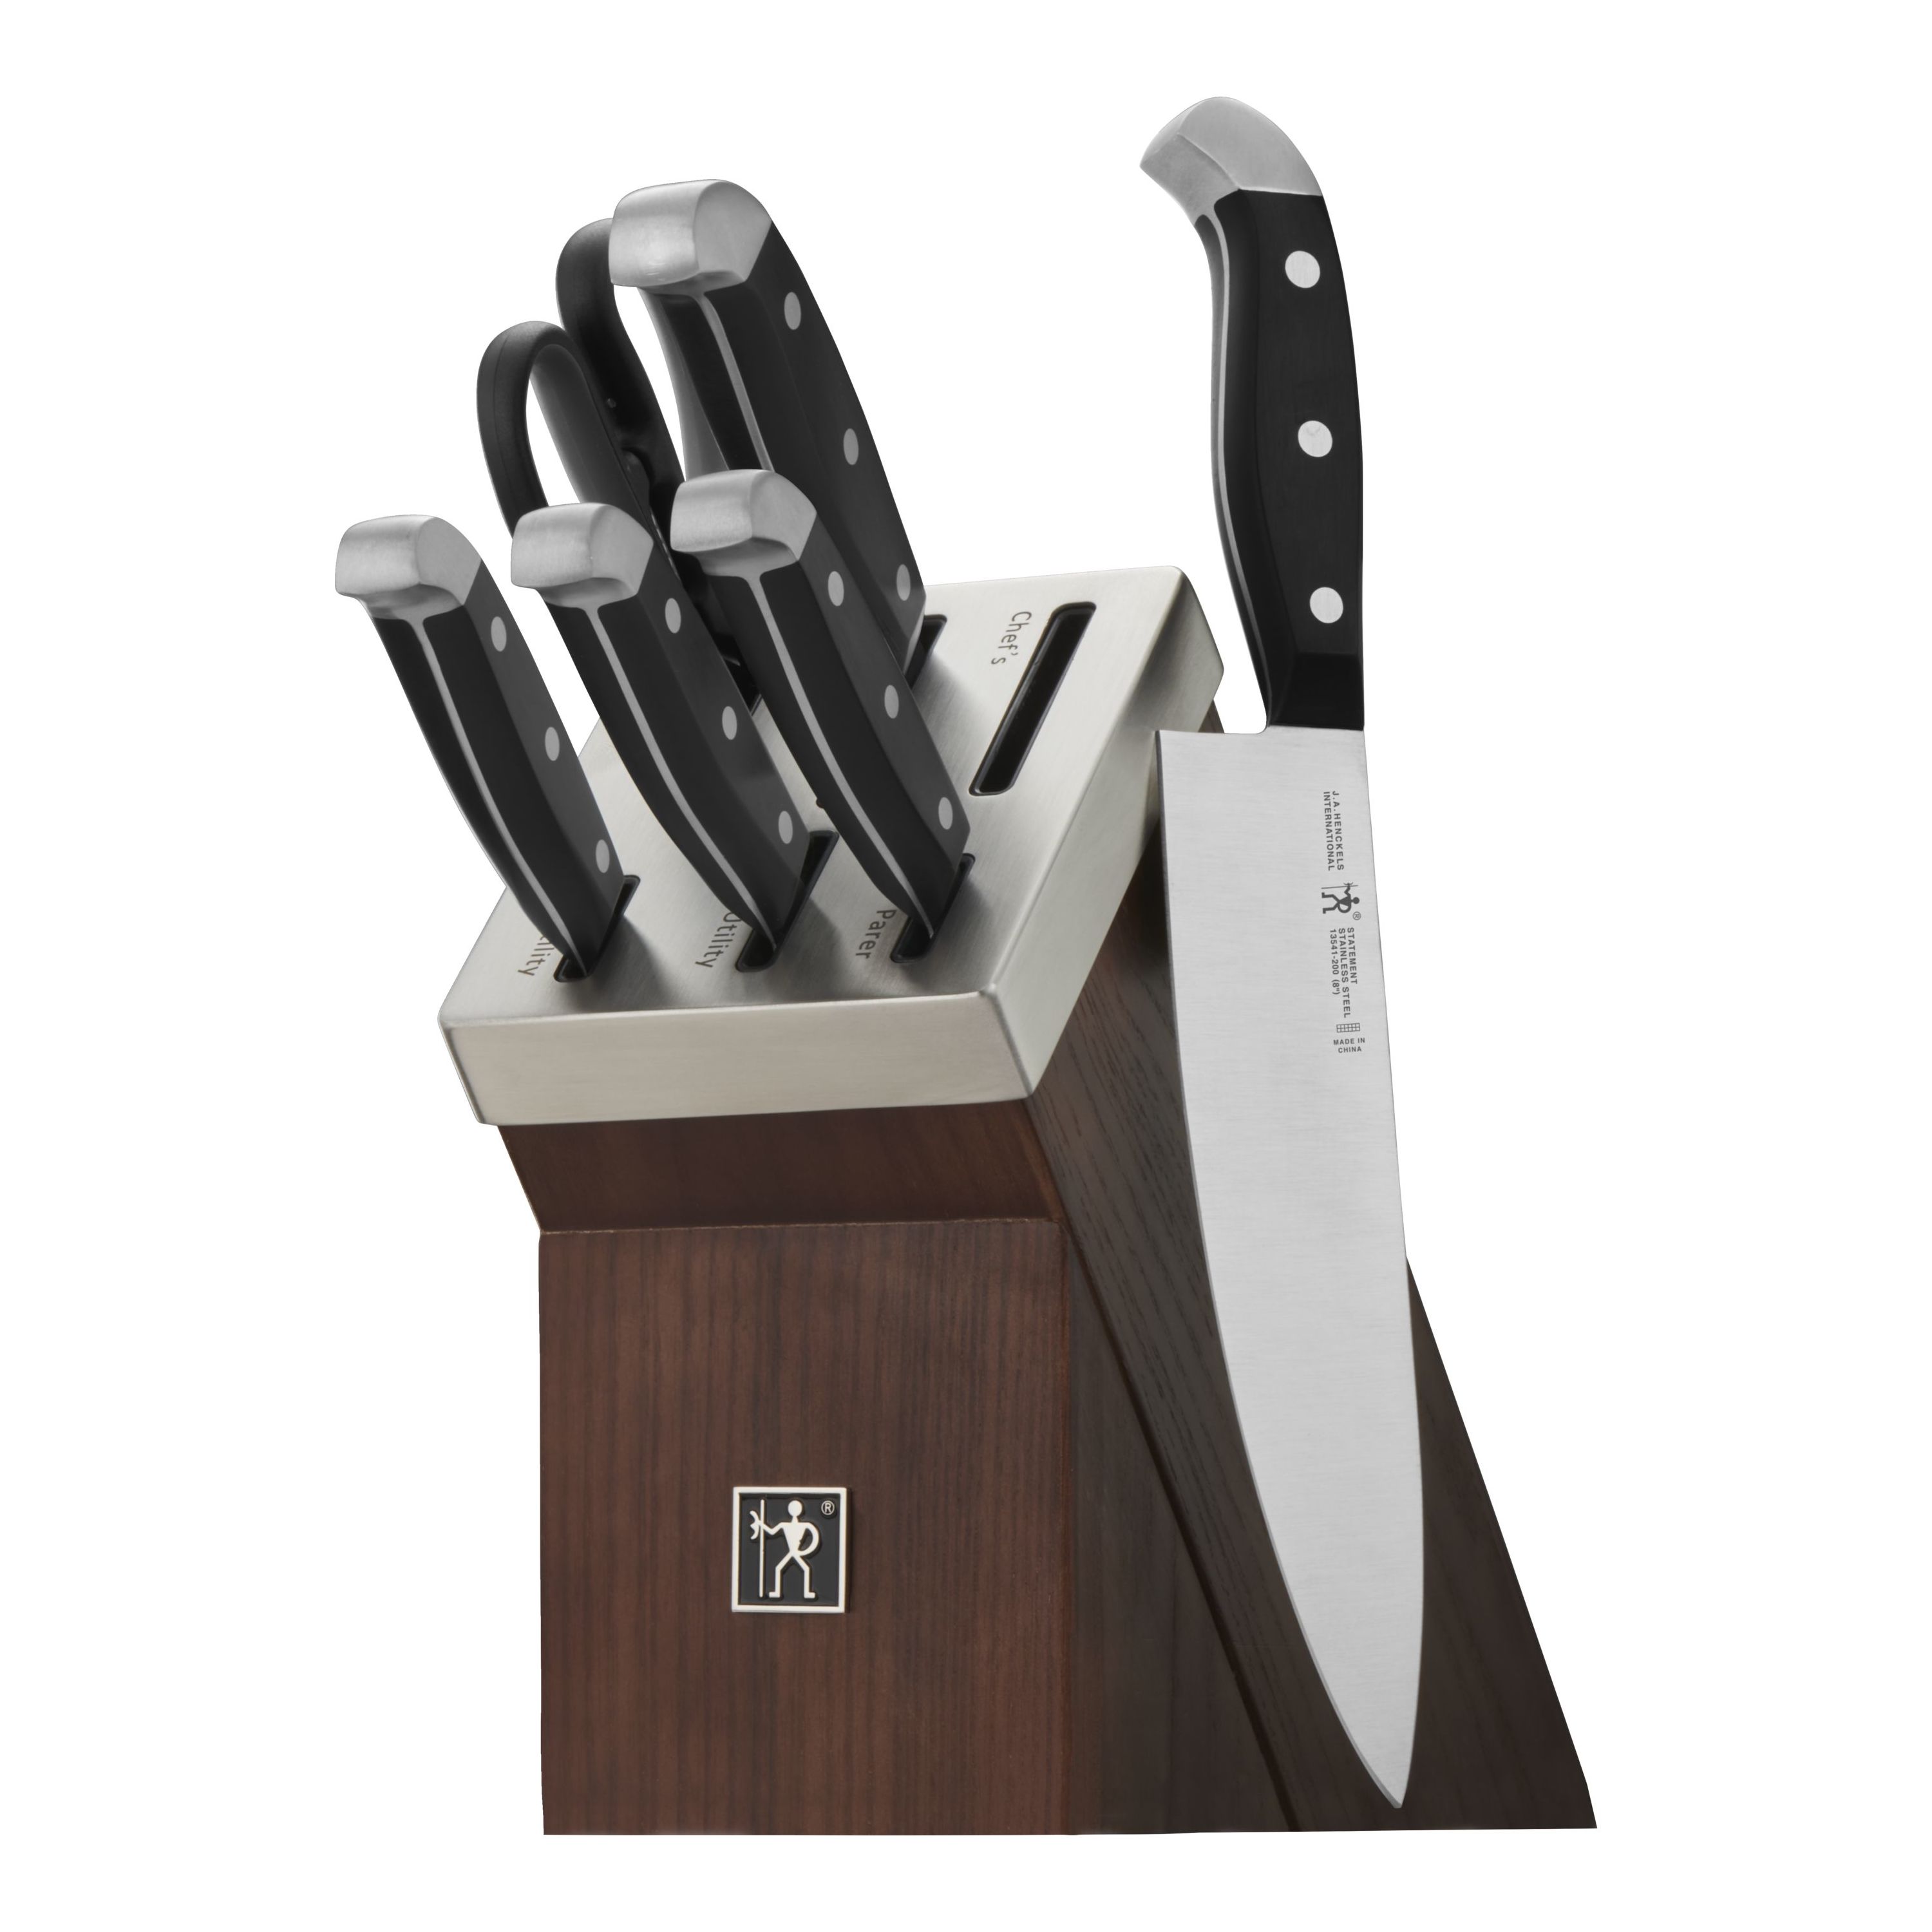 Henckels Statement Self-Sharpening Wood Knife Block Combo - Set of 7